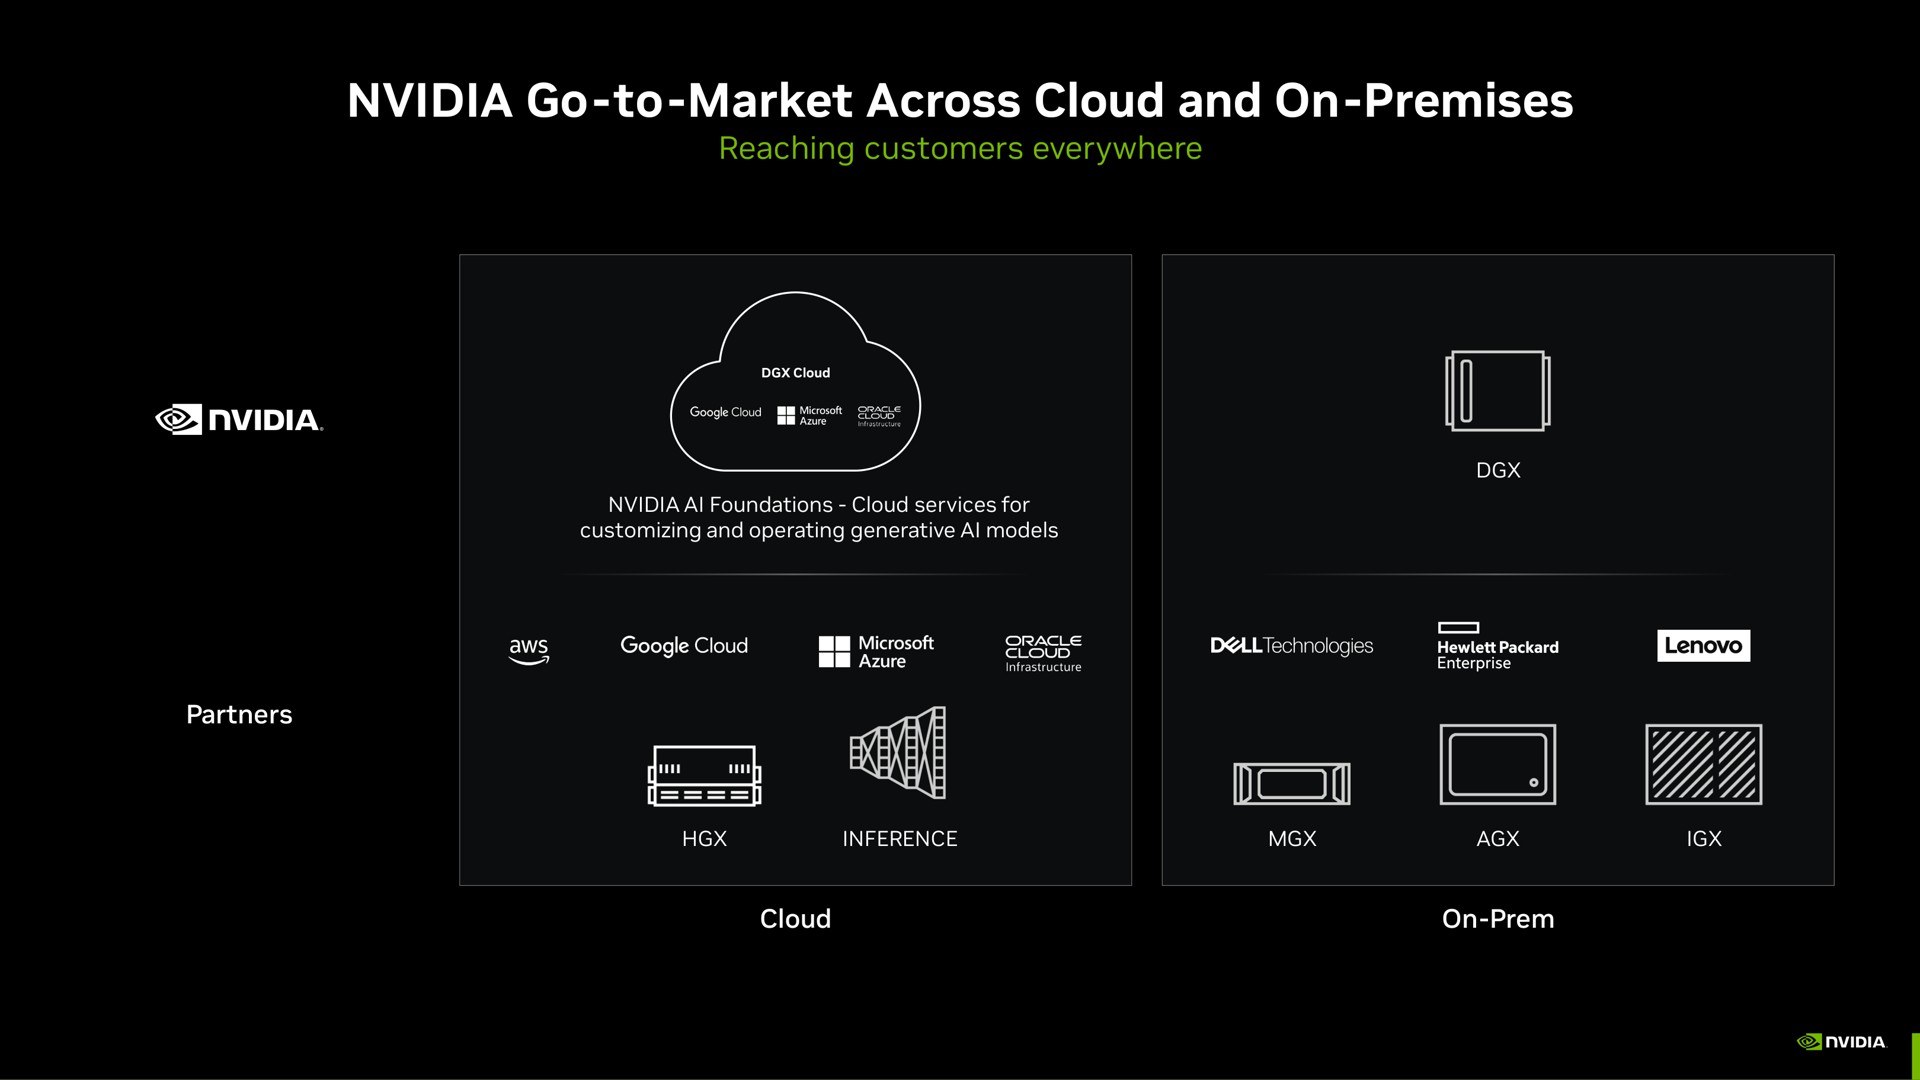 go to market across cloud and on premises poy i | NVIDIA